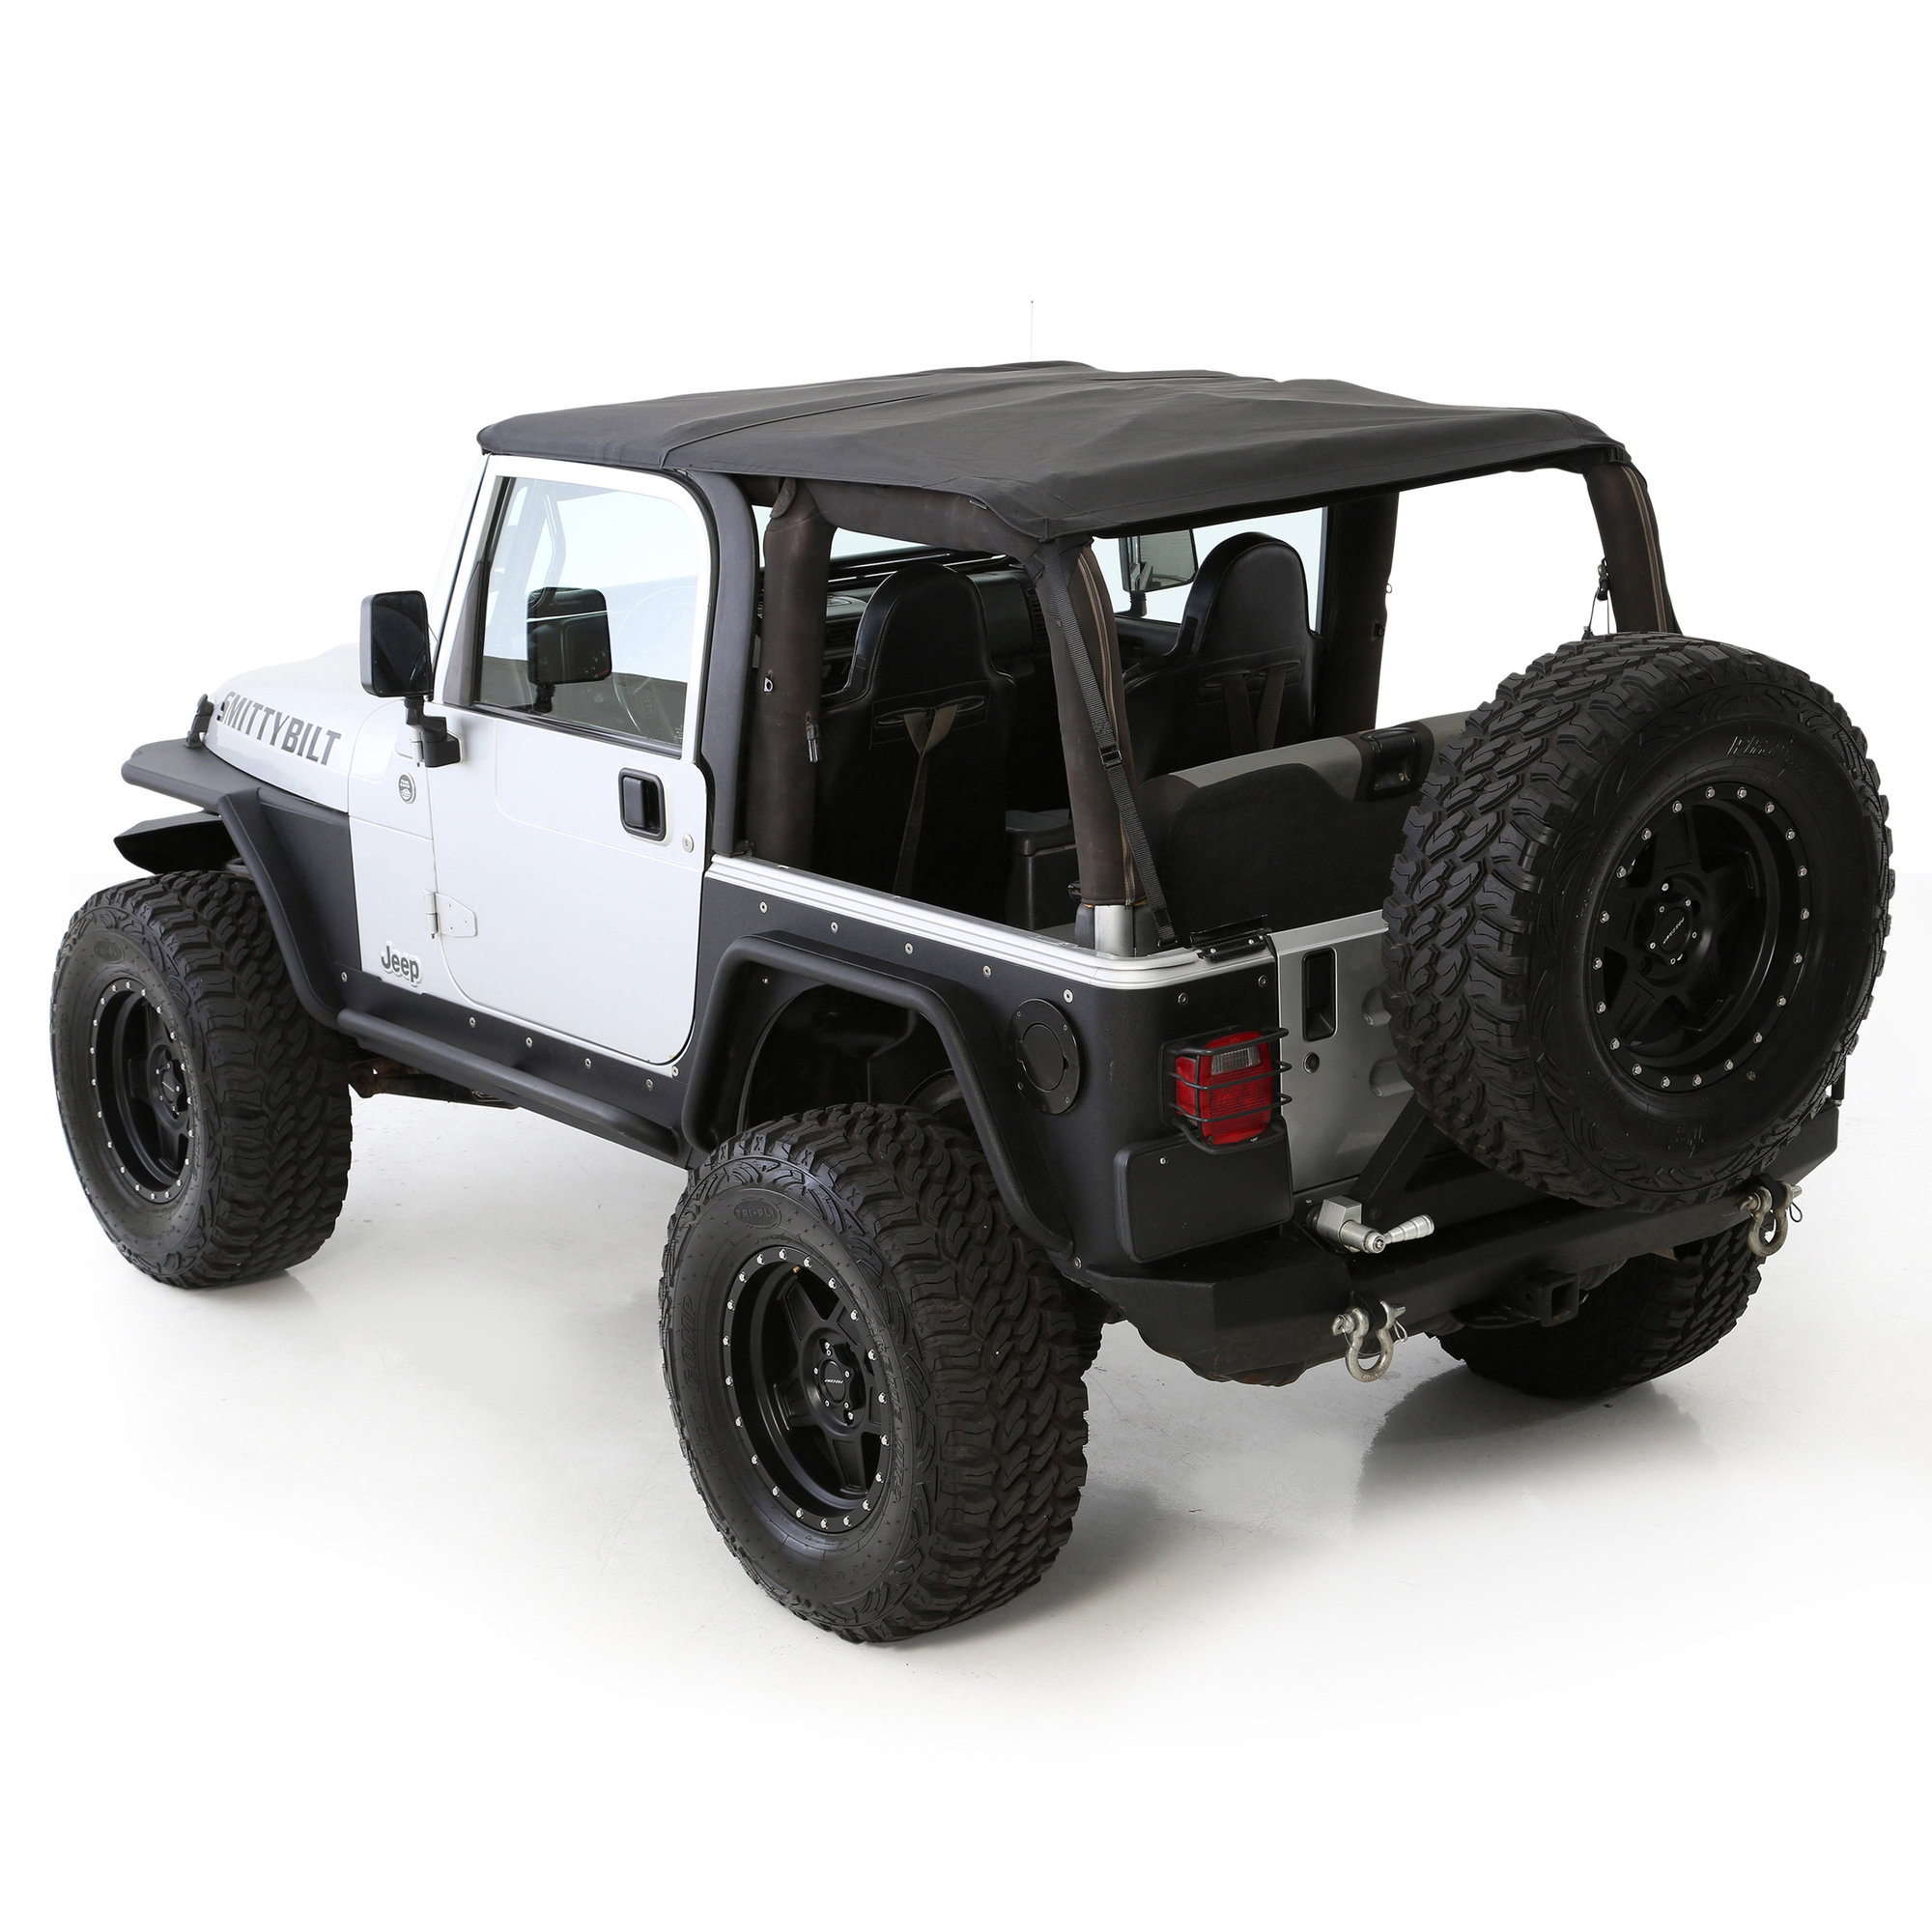 Smittybilt 9973235 Bowless Combo Soft Top for 97-06 Jeep Wrangler TJ |  Quadratec